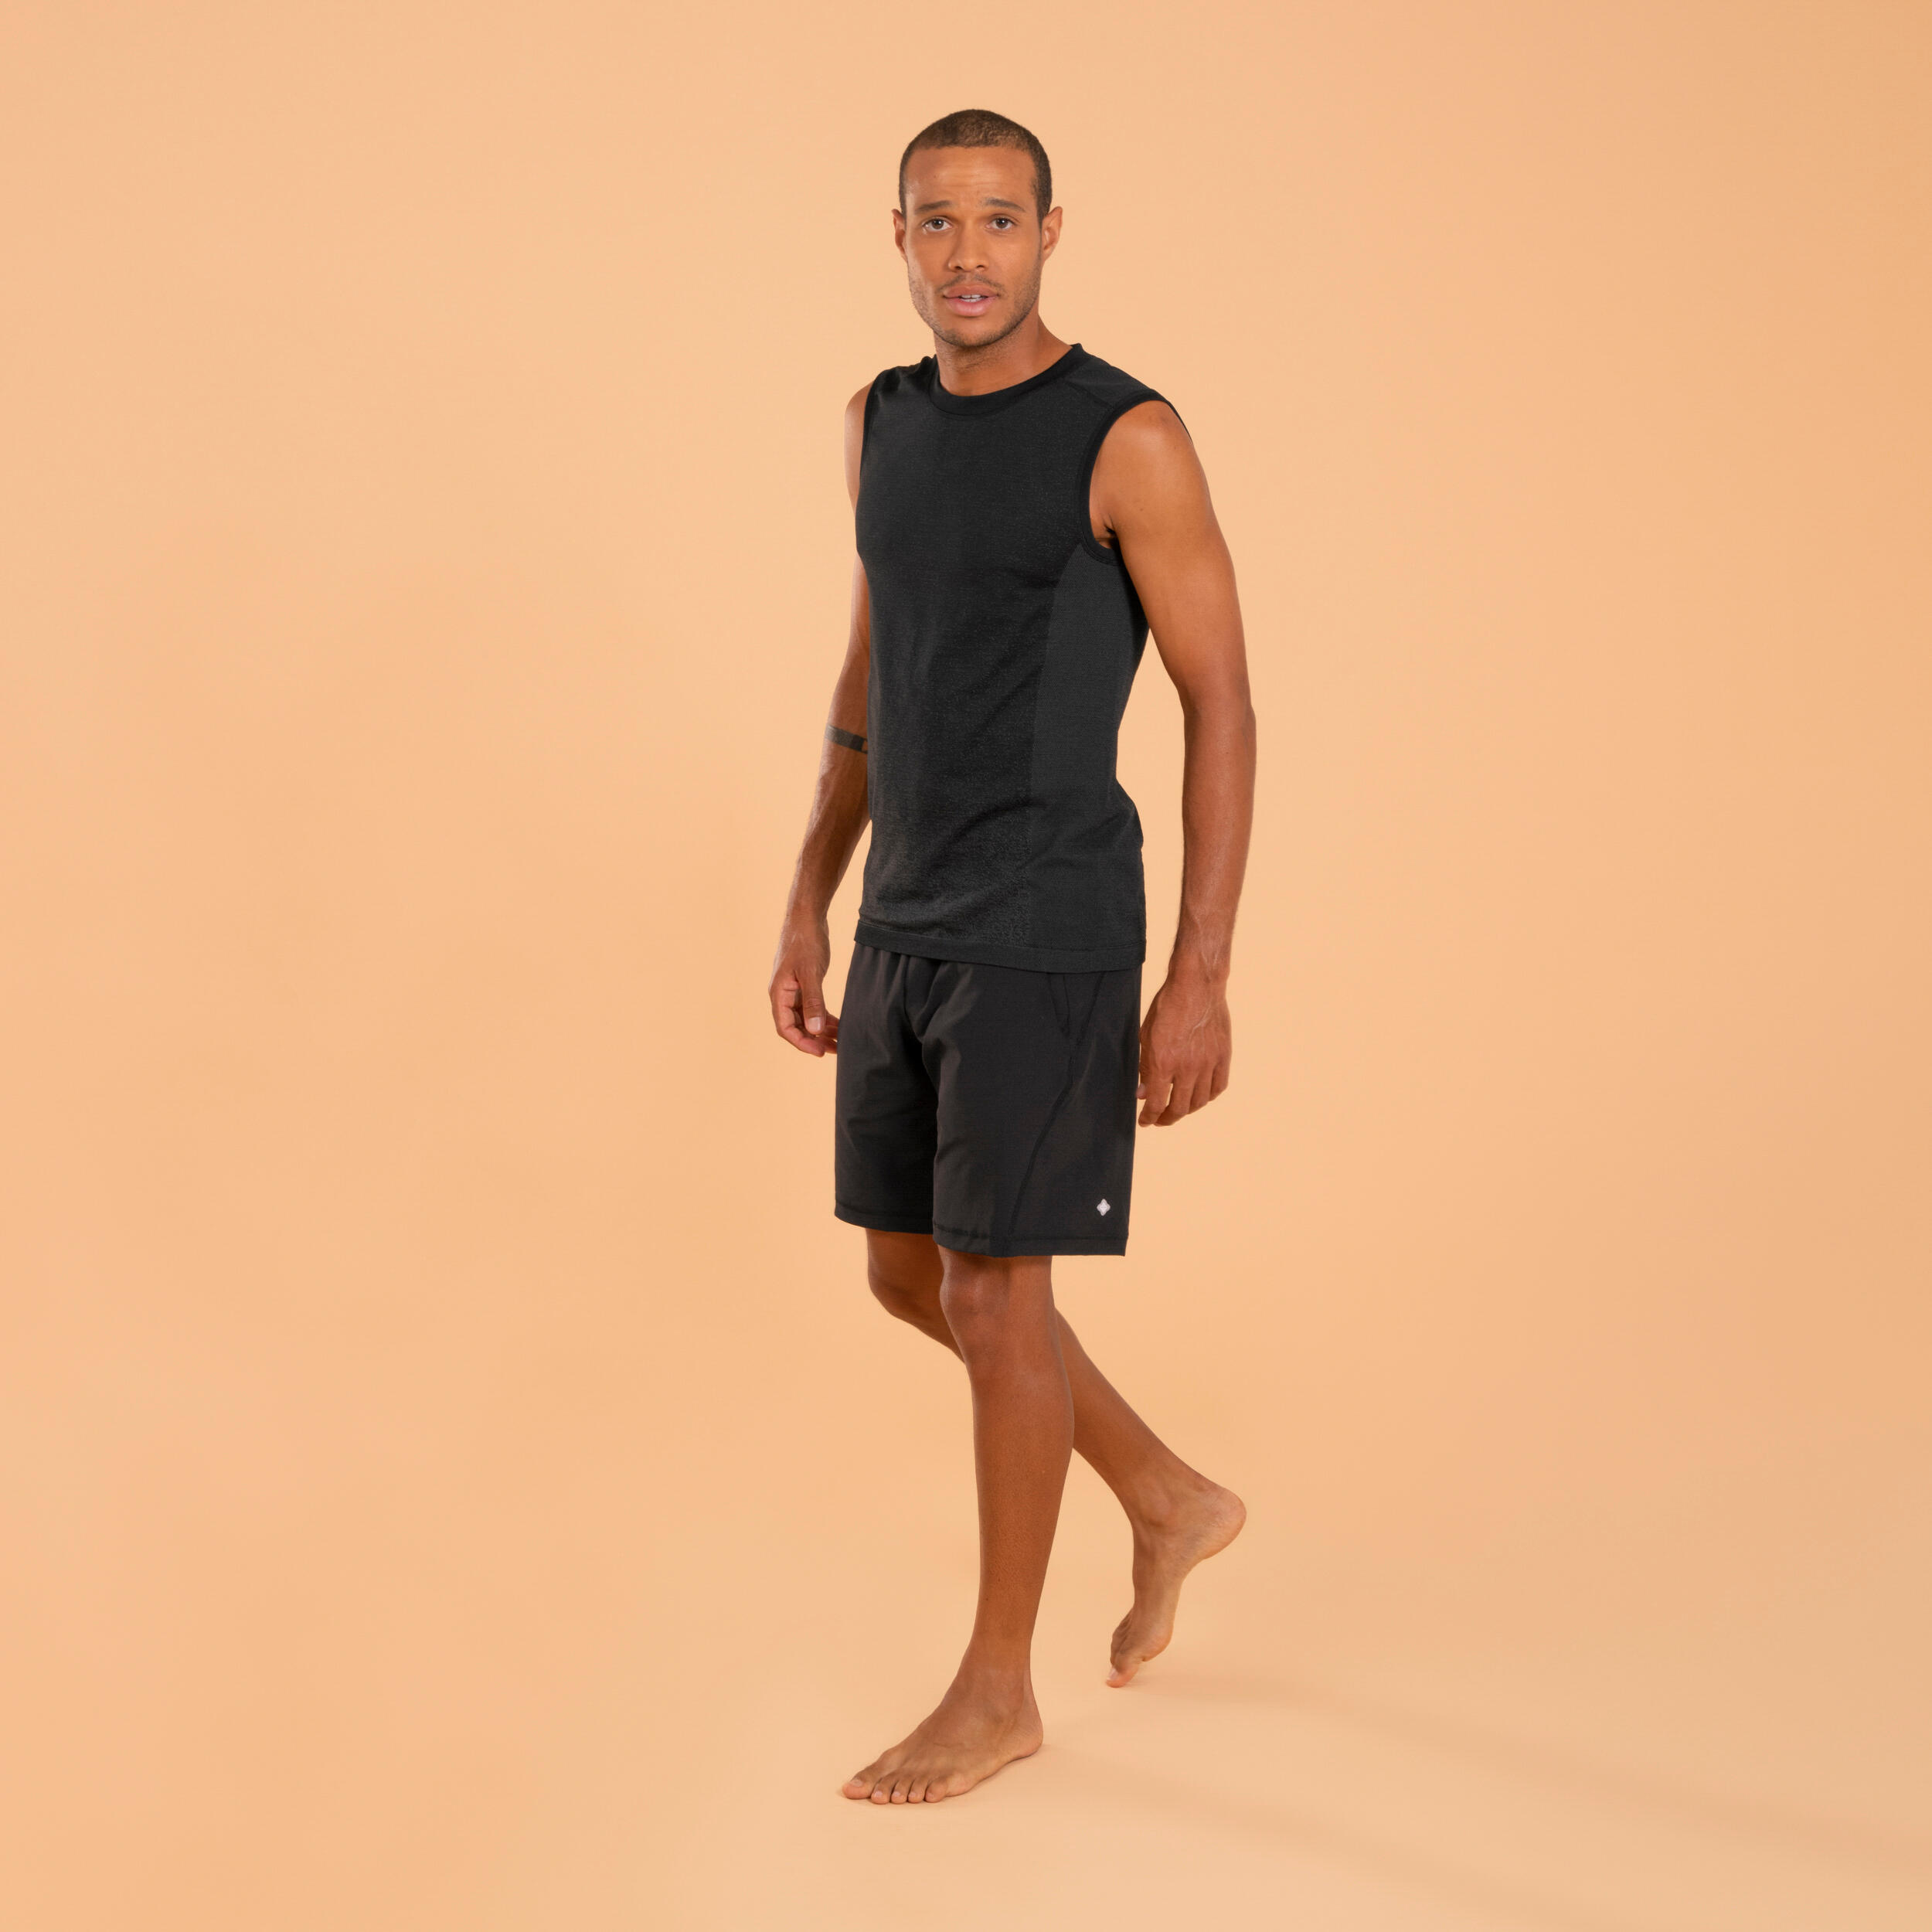 Men's Lightweight Dynamic Yoga Shorts - Black 4/4